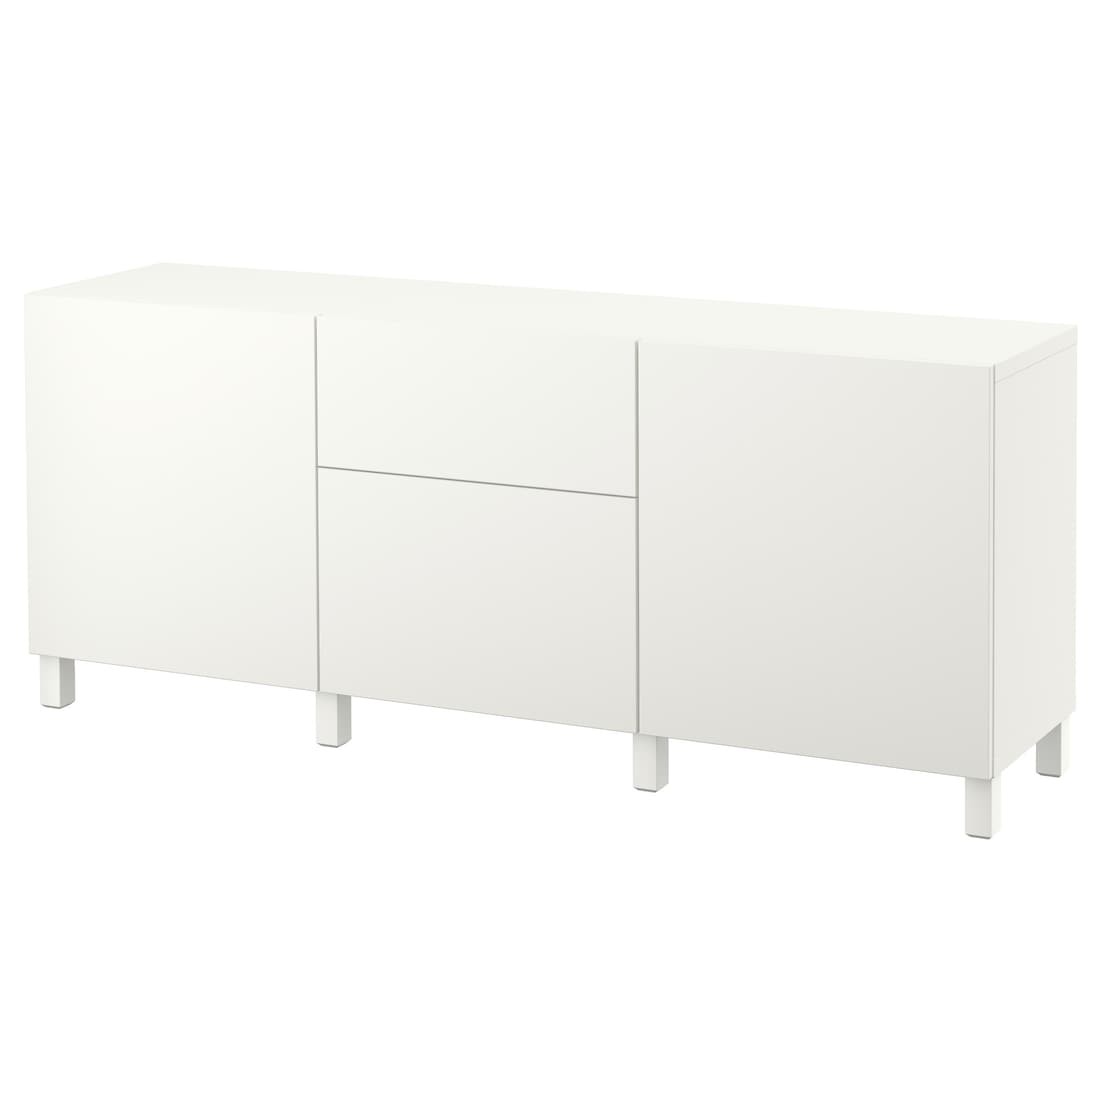 IKEA BESTÅ БЕСТО Комбинация для хранения с ящиками, белый / Lappviken / Stubbarp белый, 180x42x74 см 79195636 791.956.36